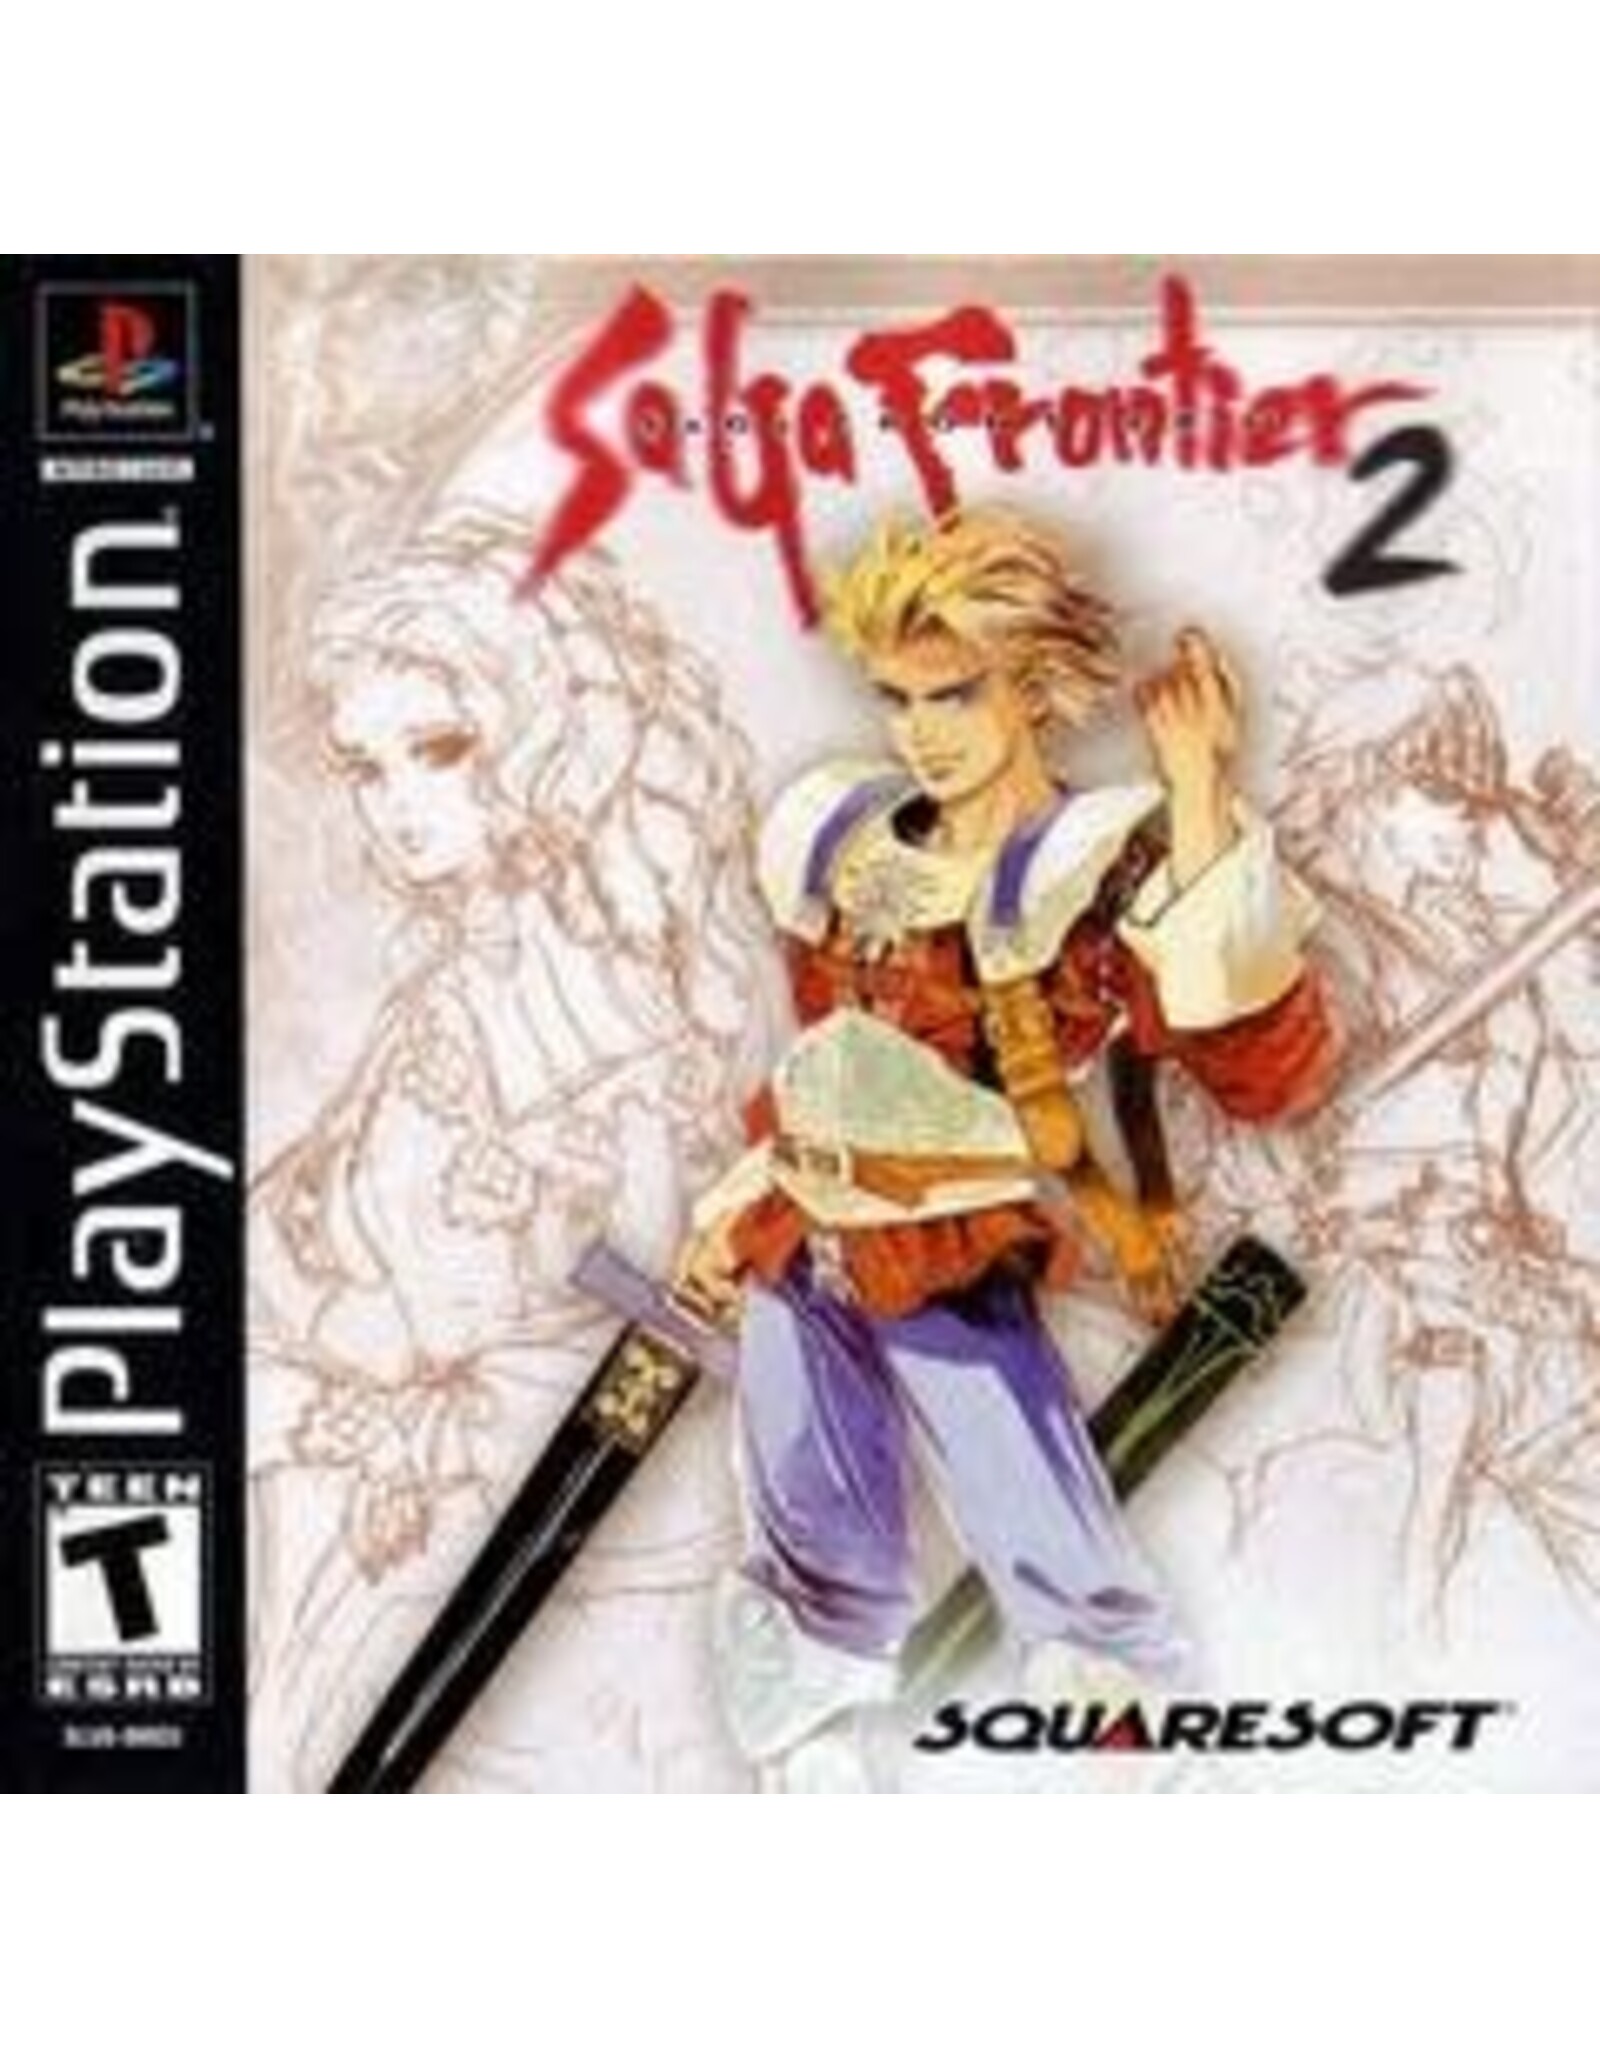 Playstation Saga Frontier 2 (Used, No Manual, Cosmetic Damage)